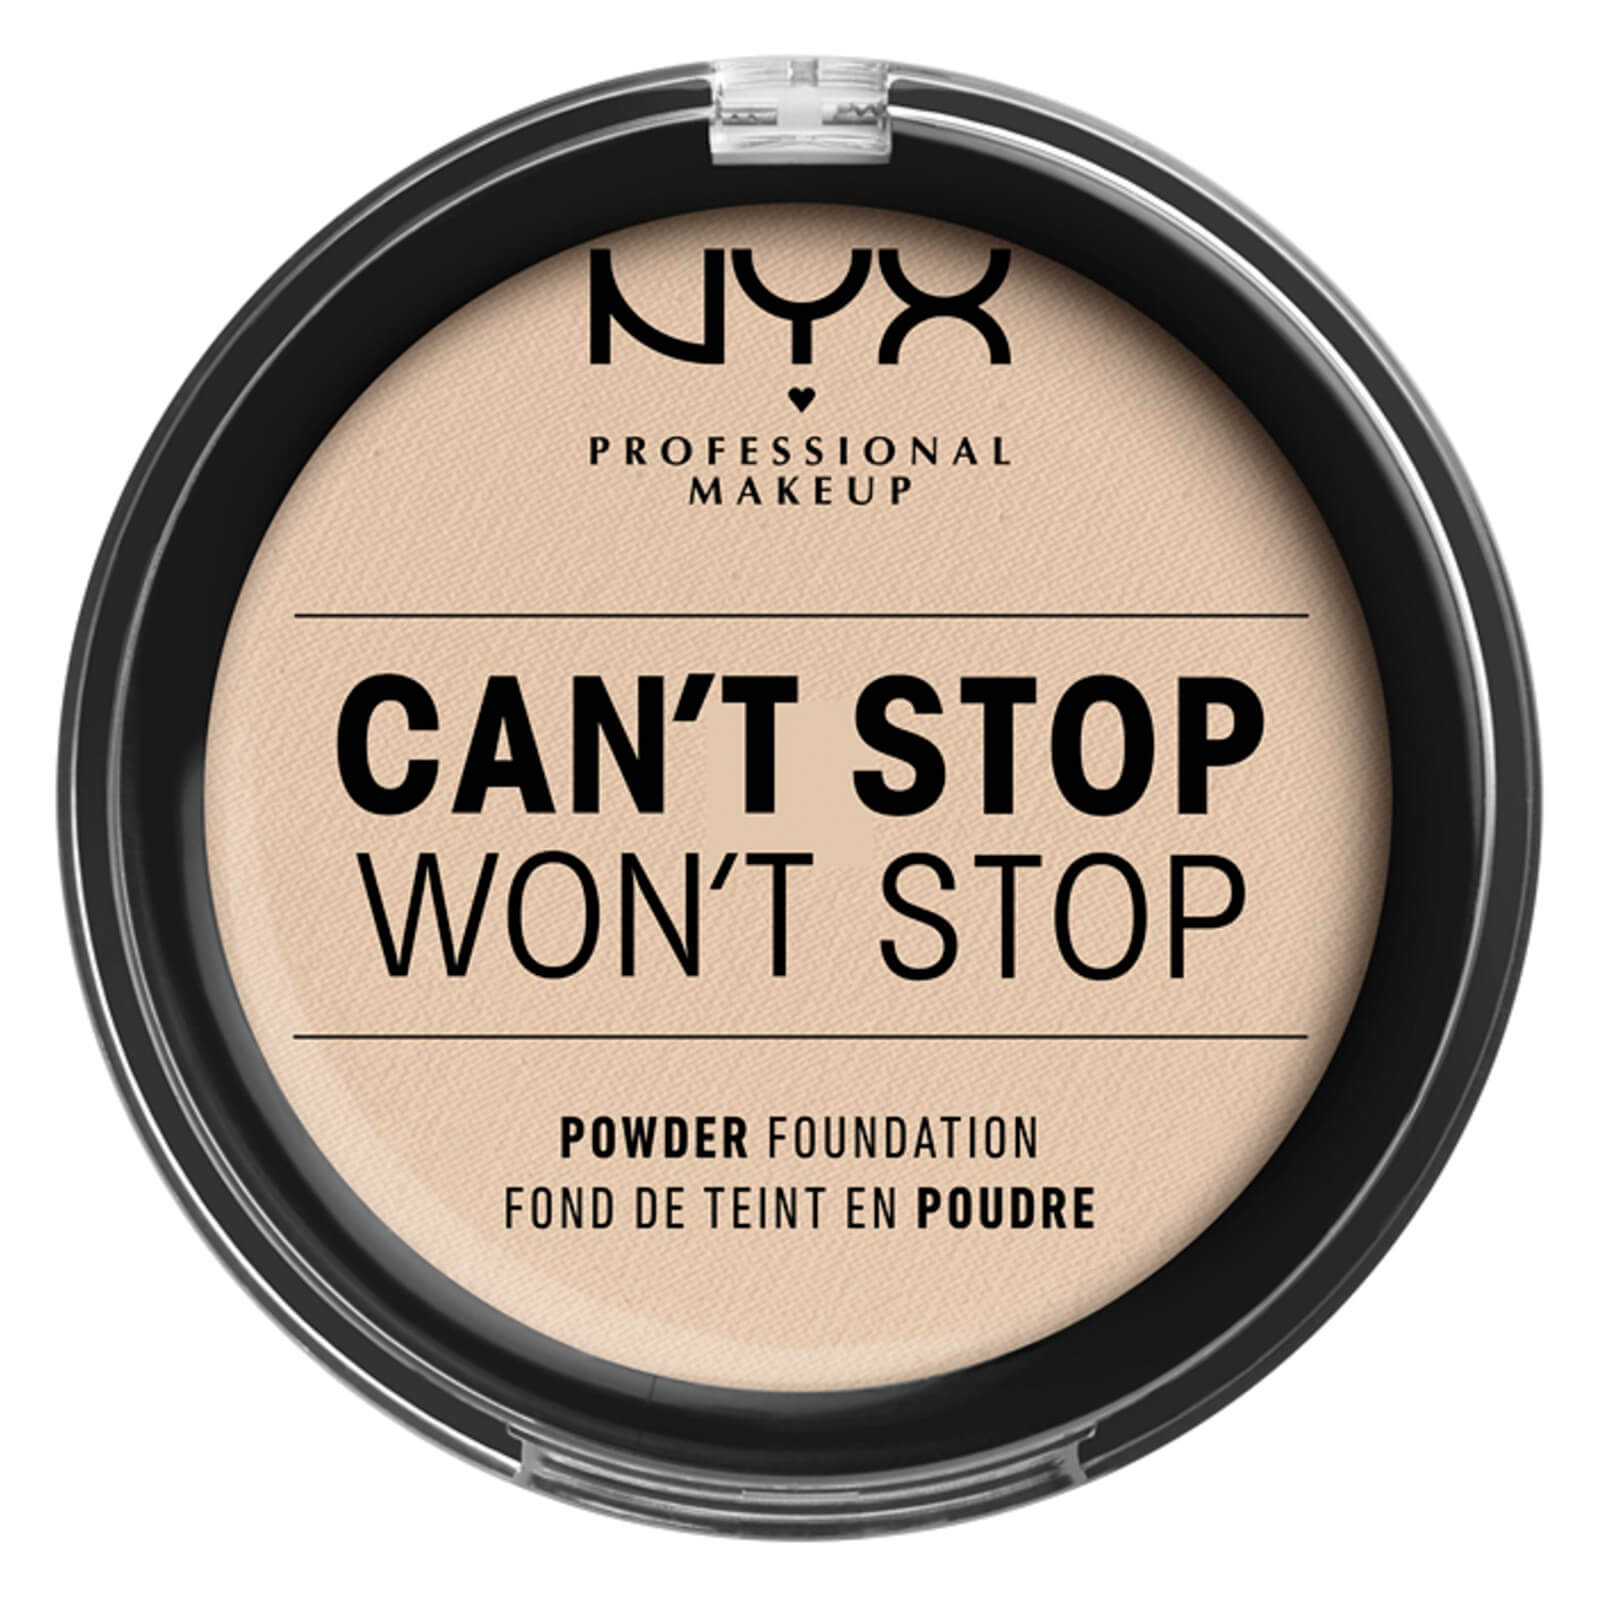 nyx professional makeup can't stop won't stop powder foundation (various shades) - fair